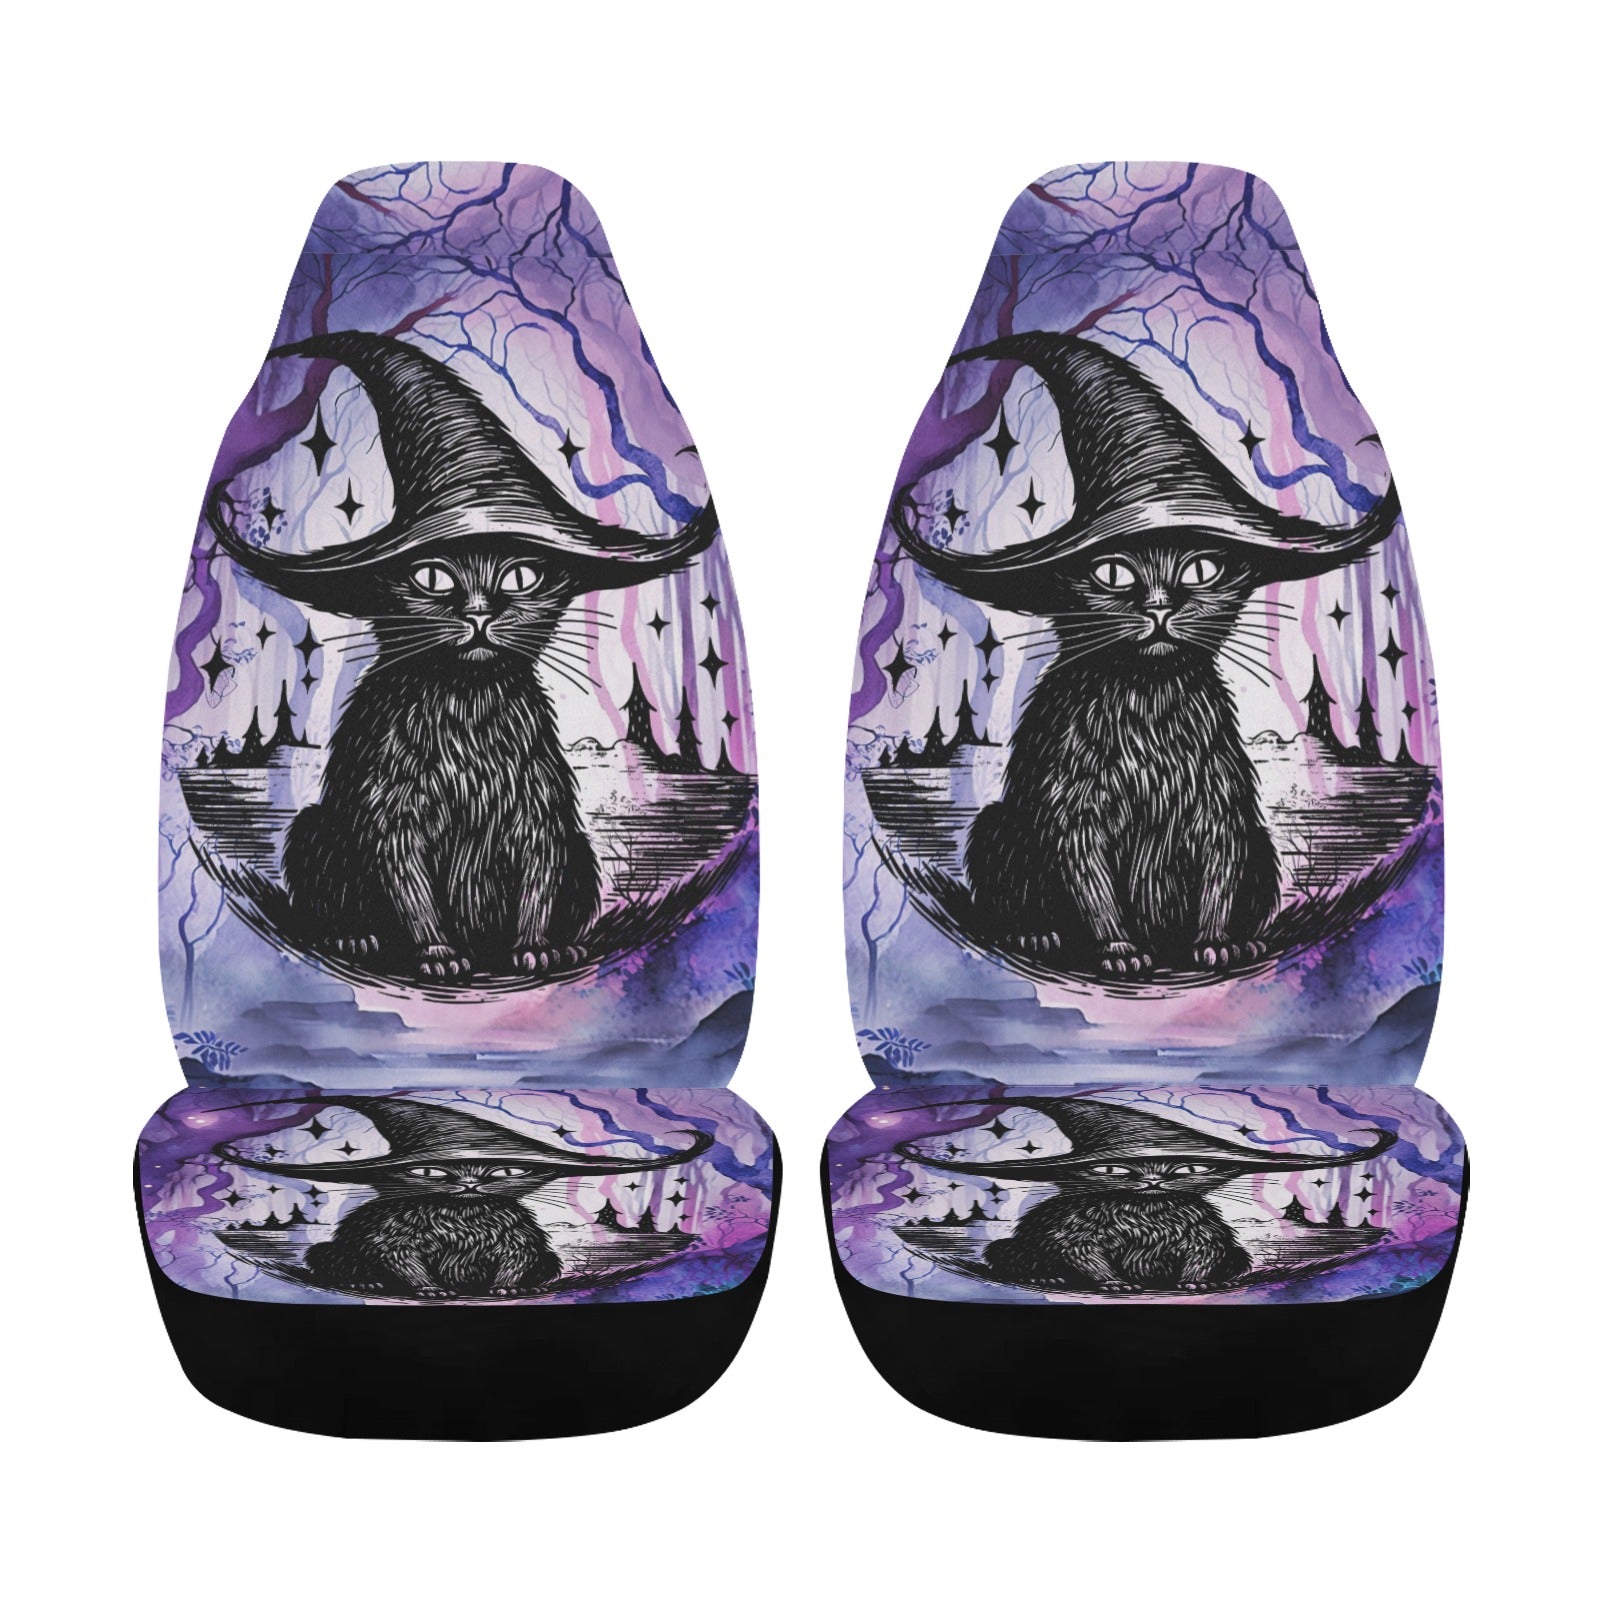 Black Cat Gothic Car Seat Cover-MoonChildWorld